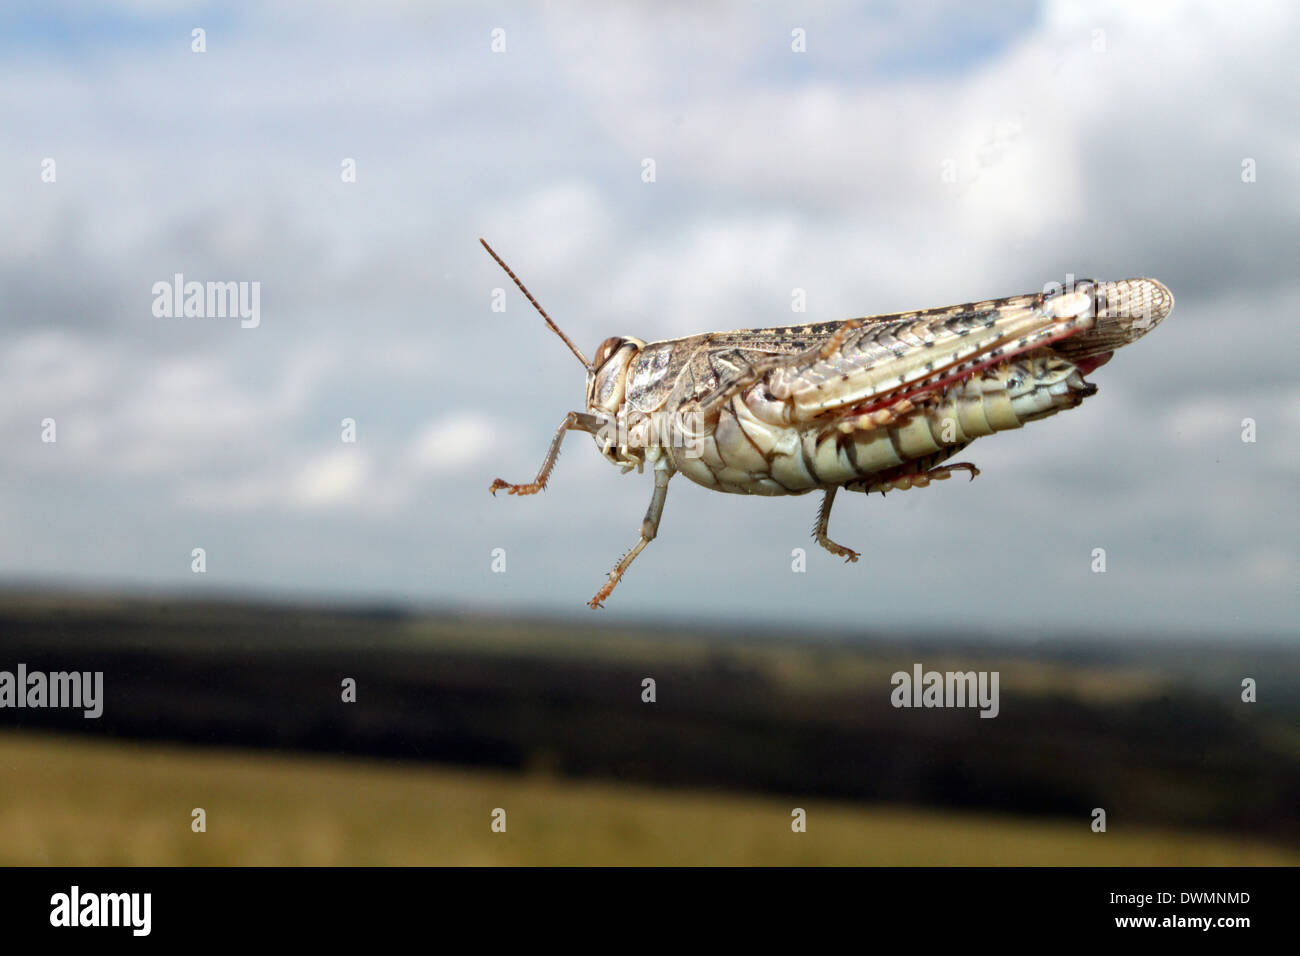 Grasshopper jump close up, insect macro Stock Photo